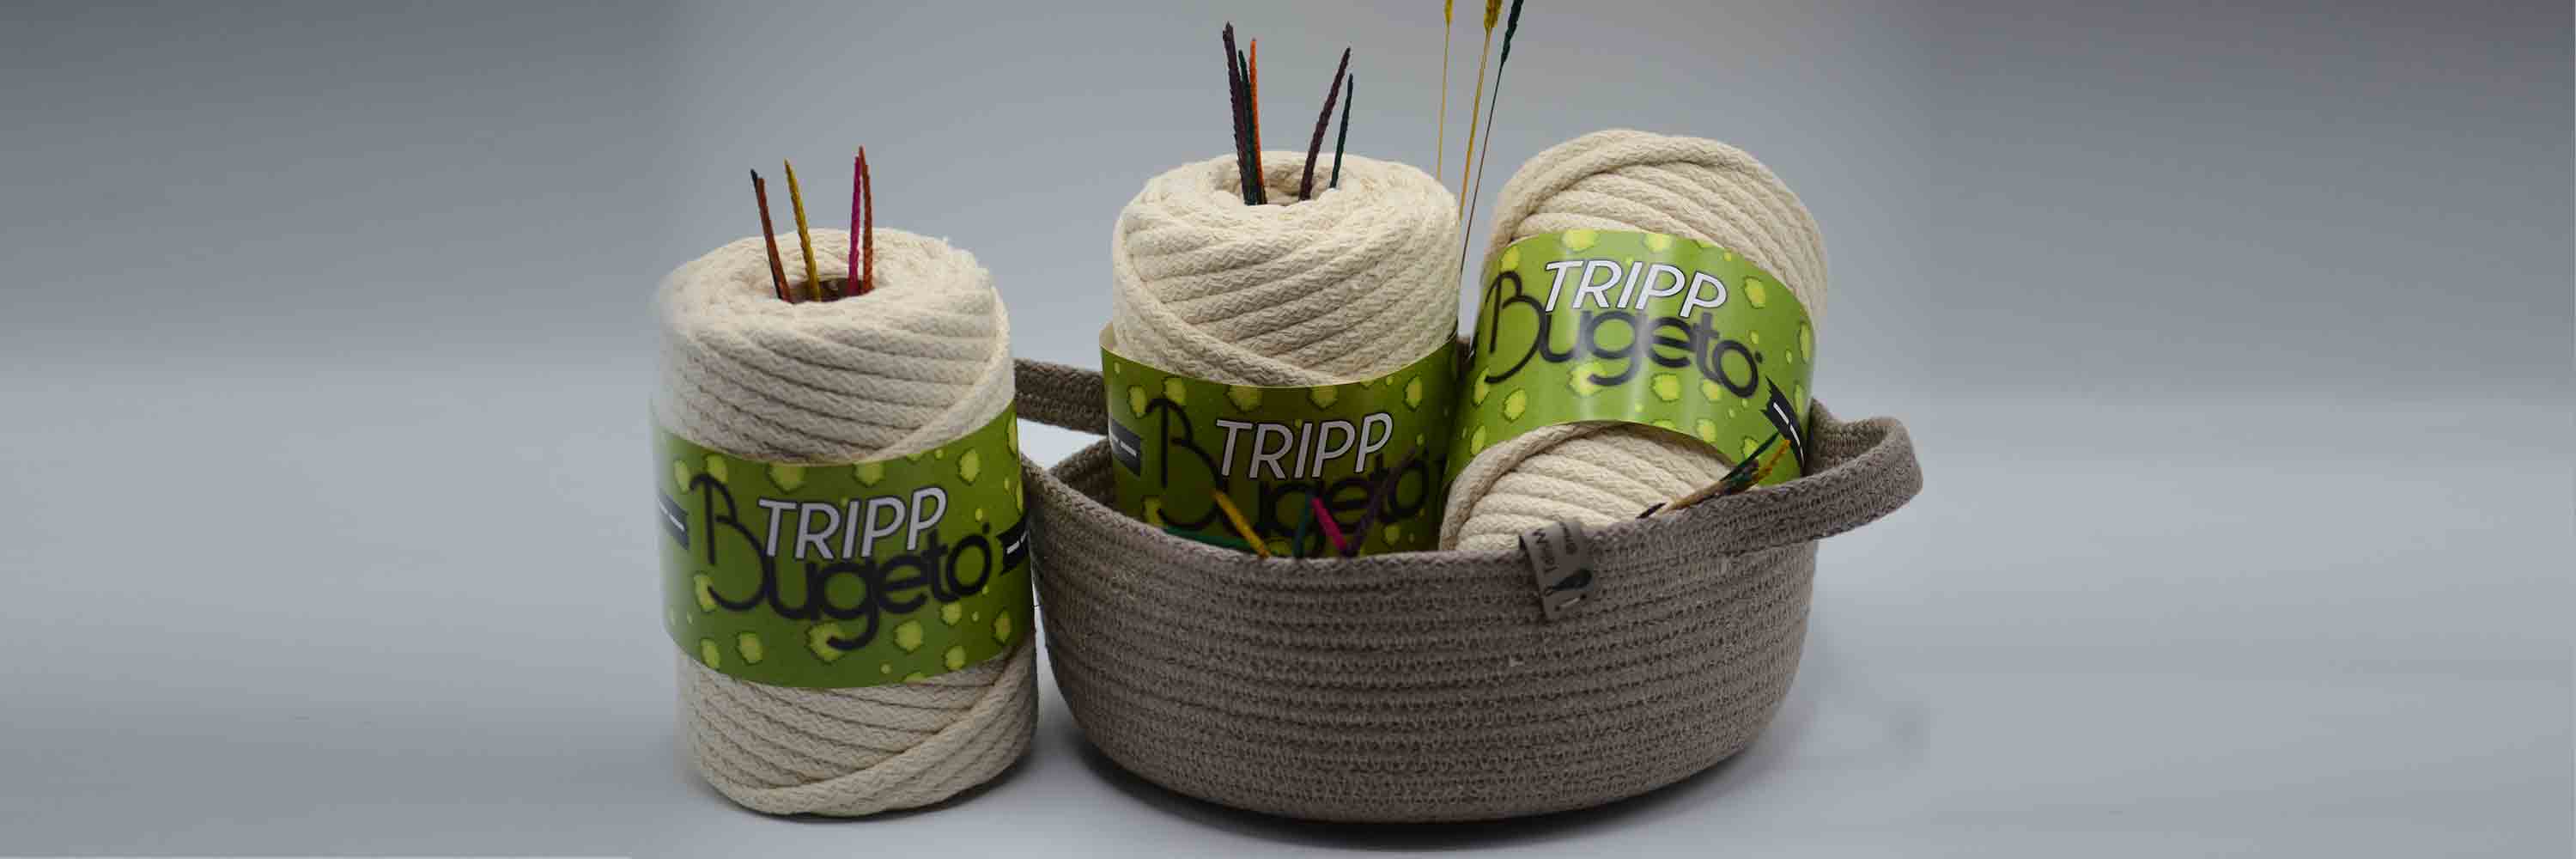 tripp yarn for sewing machine cotton filled 9mm cotton inside soft sewing yarn bugeto yarn